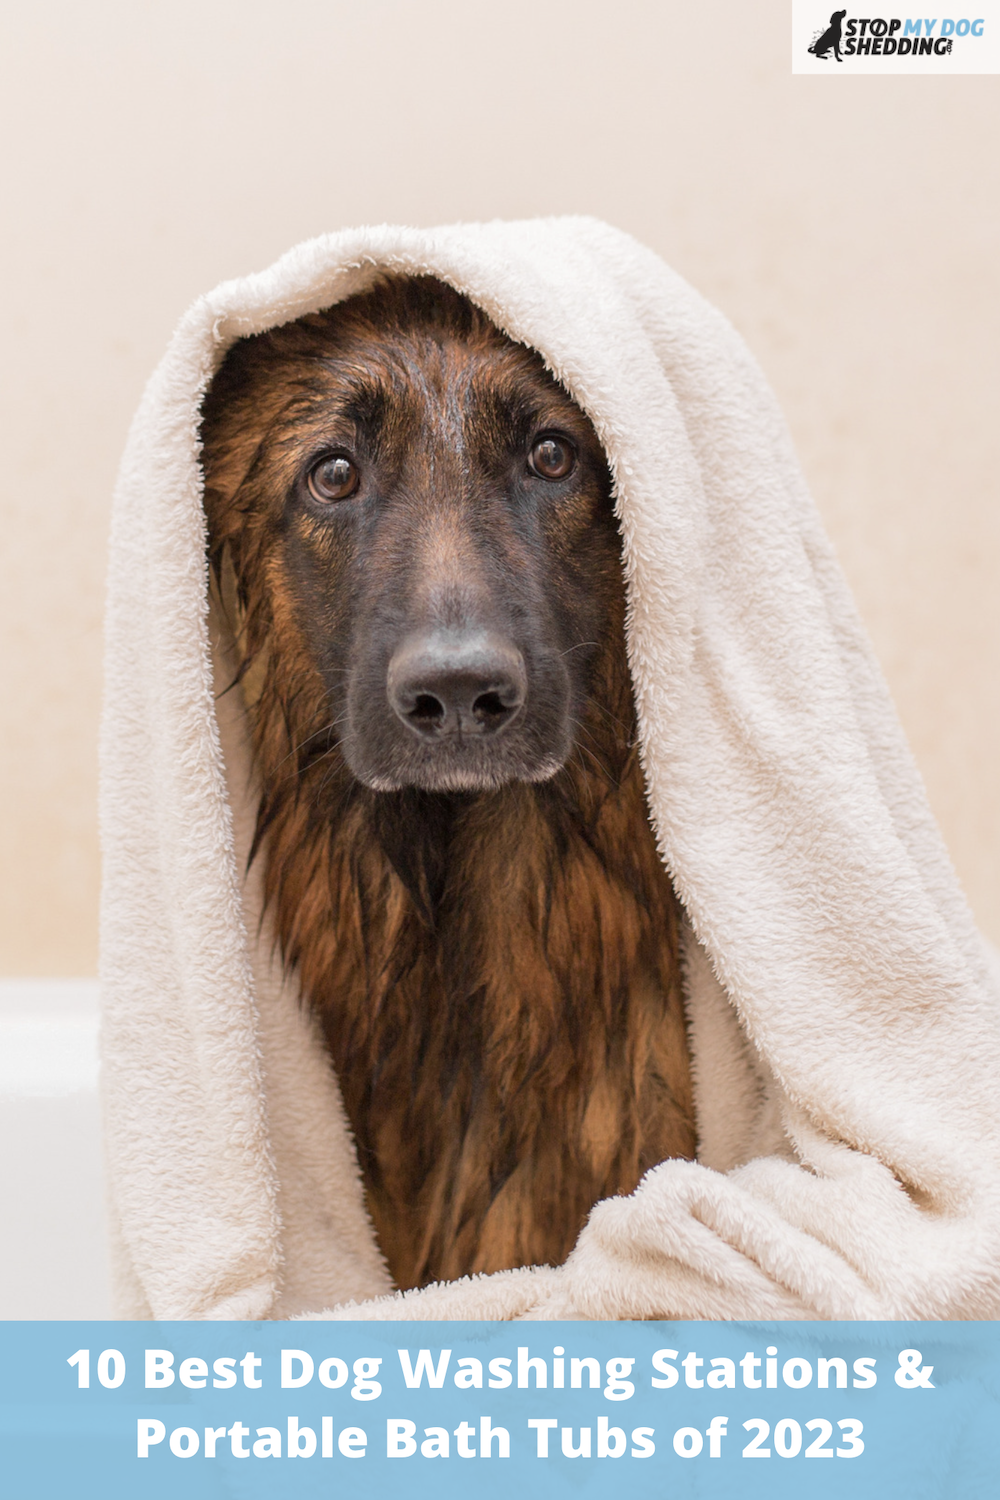 10 Best Dog Washing Stations & Portable Dog Bath Tubs of 2023